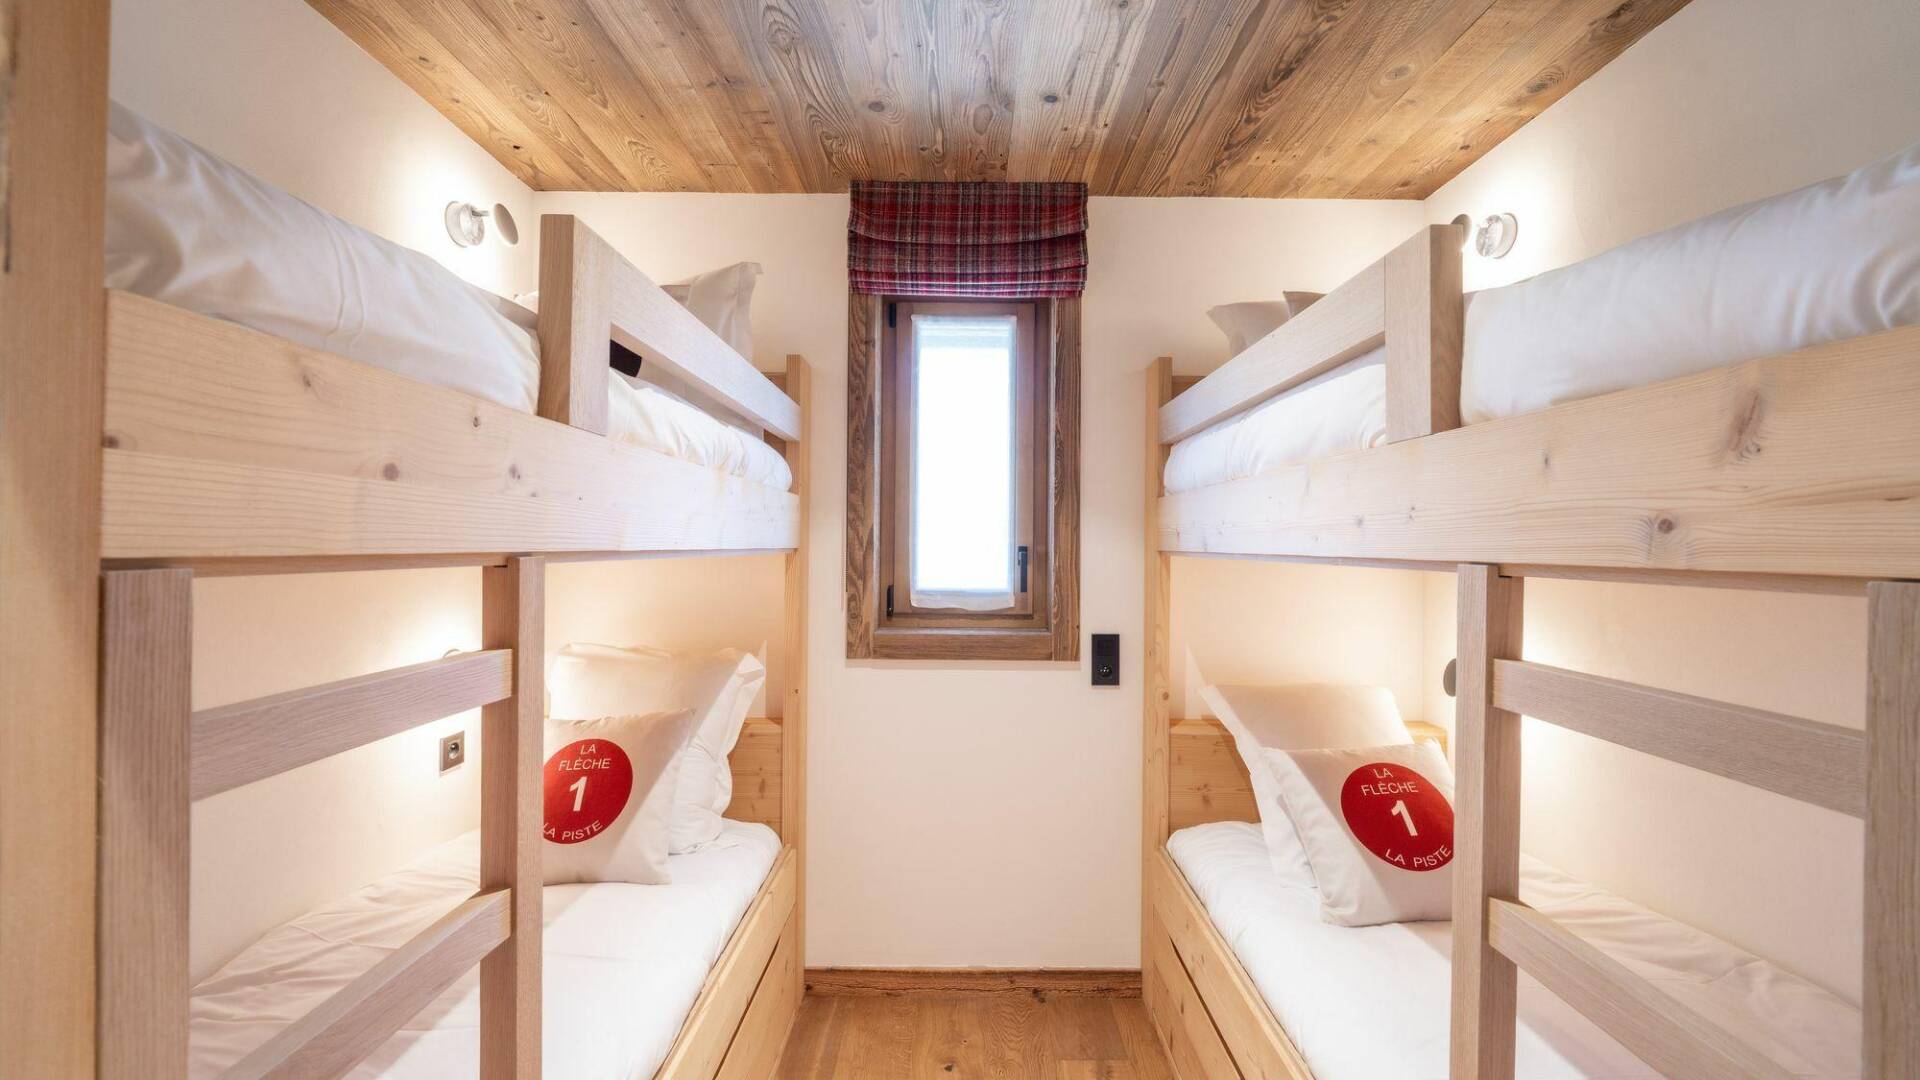 quadruple bedroom with 2 sets of bunk beds for children